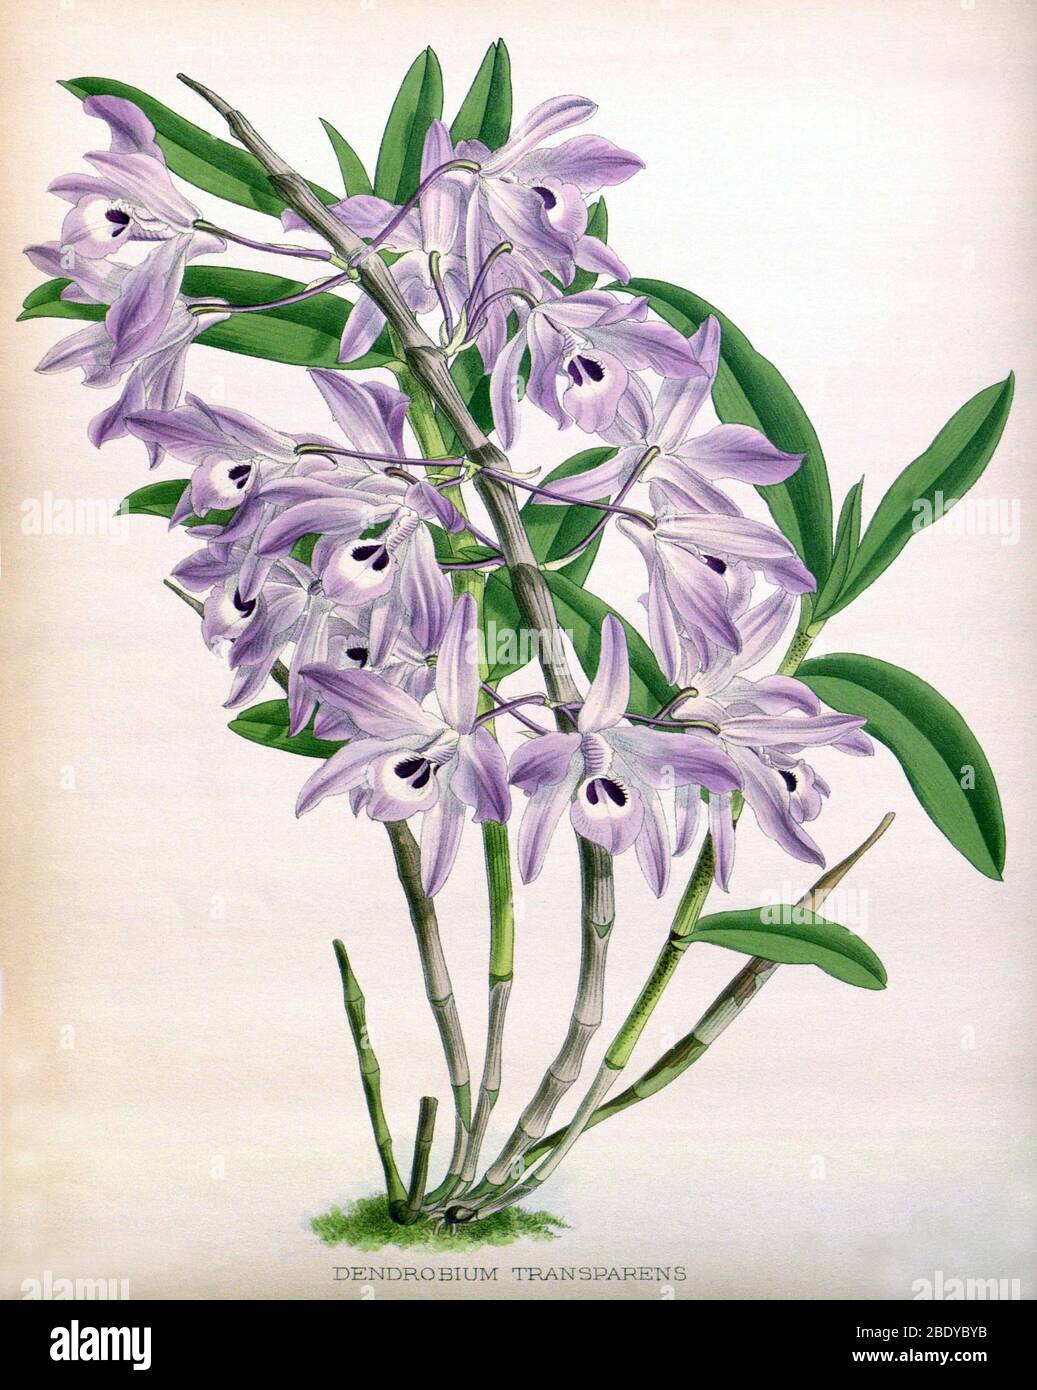 Orchid, Dendrobium transparens, 1891 Stock Photo